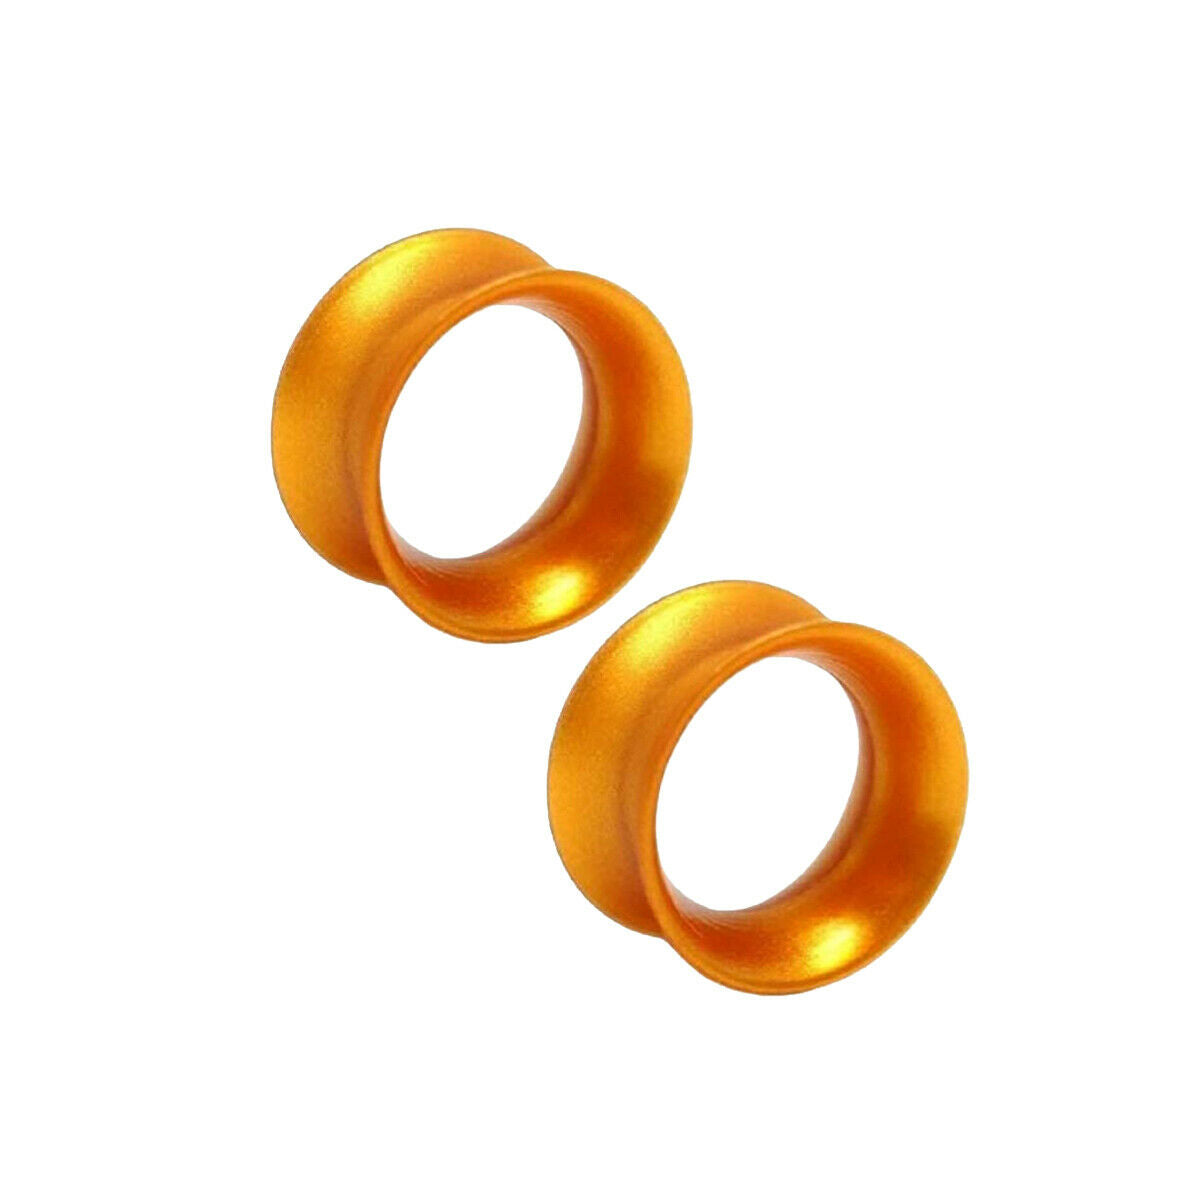 Thin Silicone Ear Plugs Tunnels Flexible Ear Earlets Gold metallic Flexible Expander Piercing Jewelry